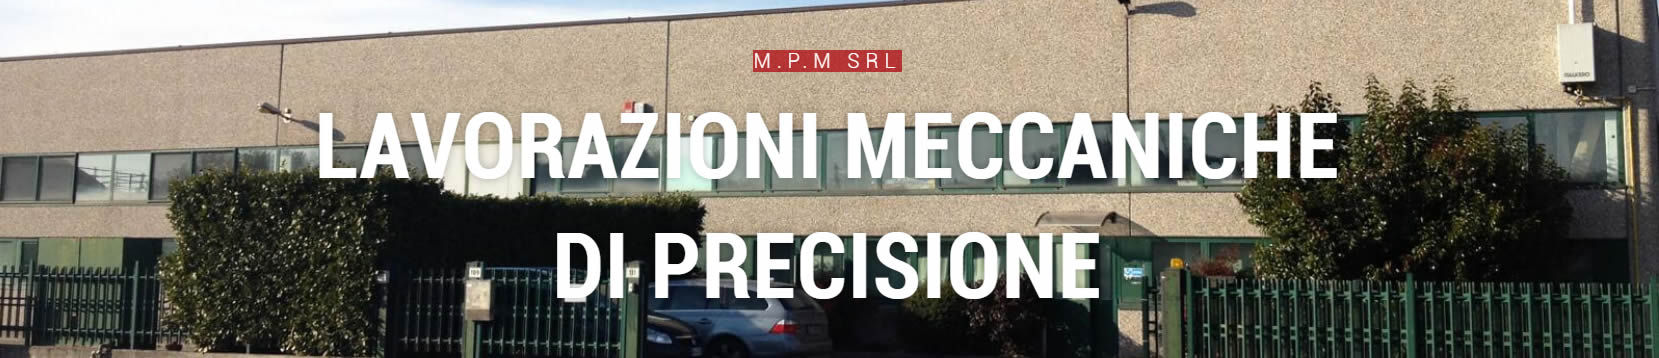 Officina meccanica di precisione Solbiate Olona MPM srl